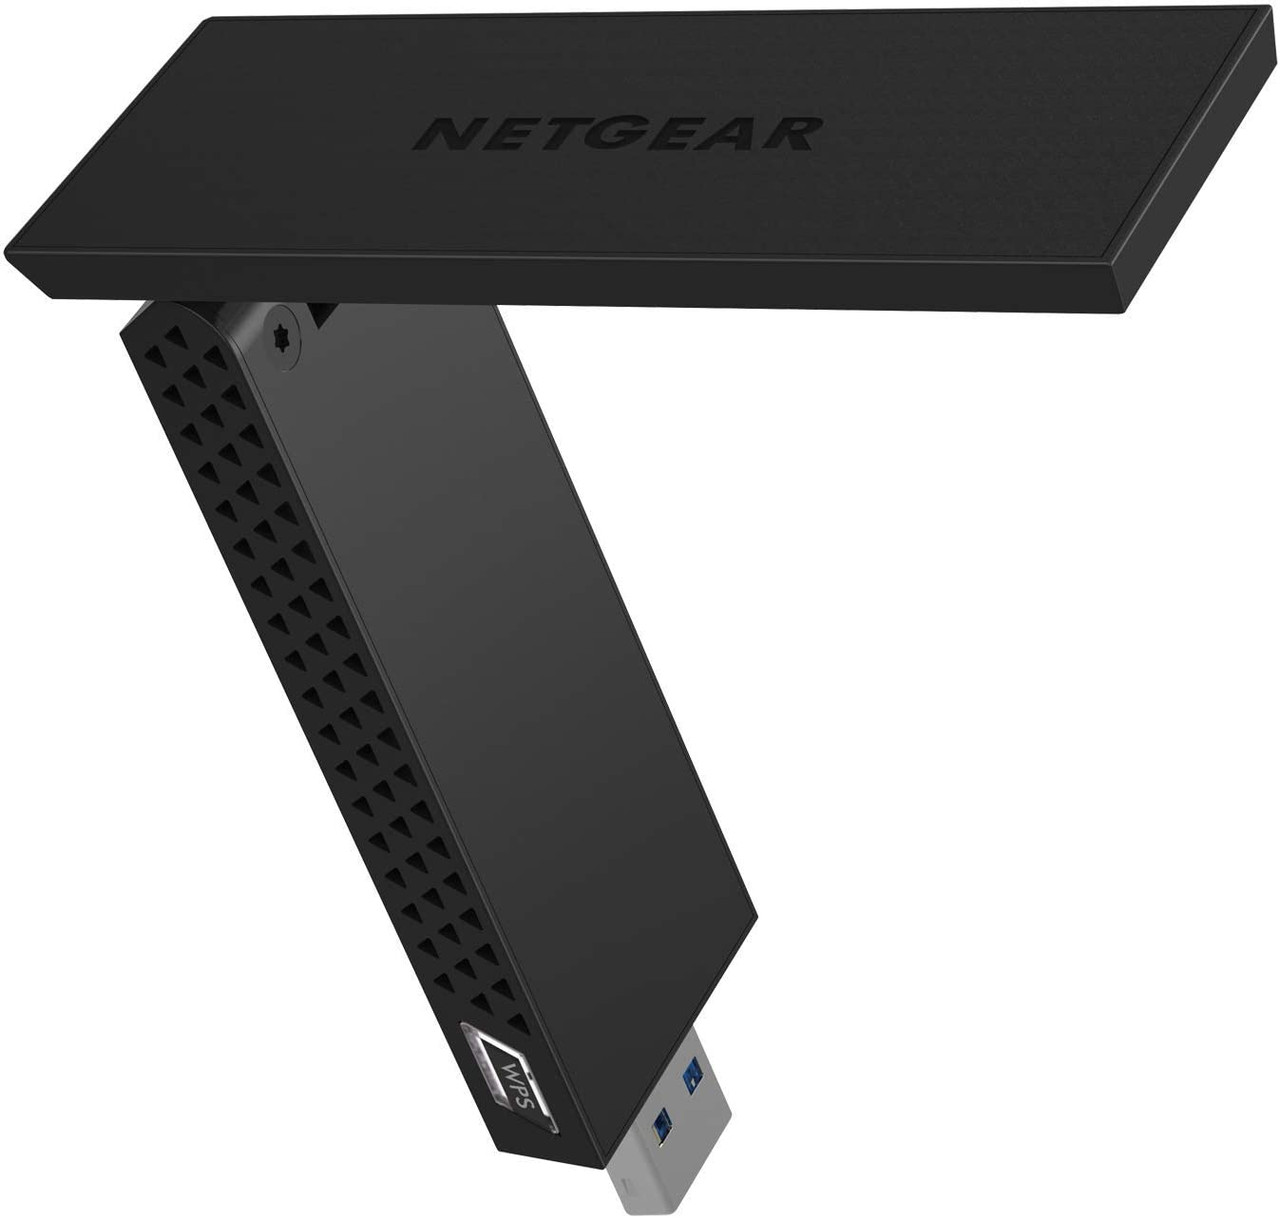 NETGEAR A6210-10000R AC1200 WiFi 3.0 Adapter-USB 2 Band - Certified Refurbished